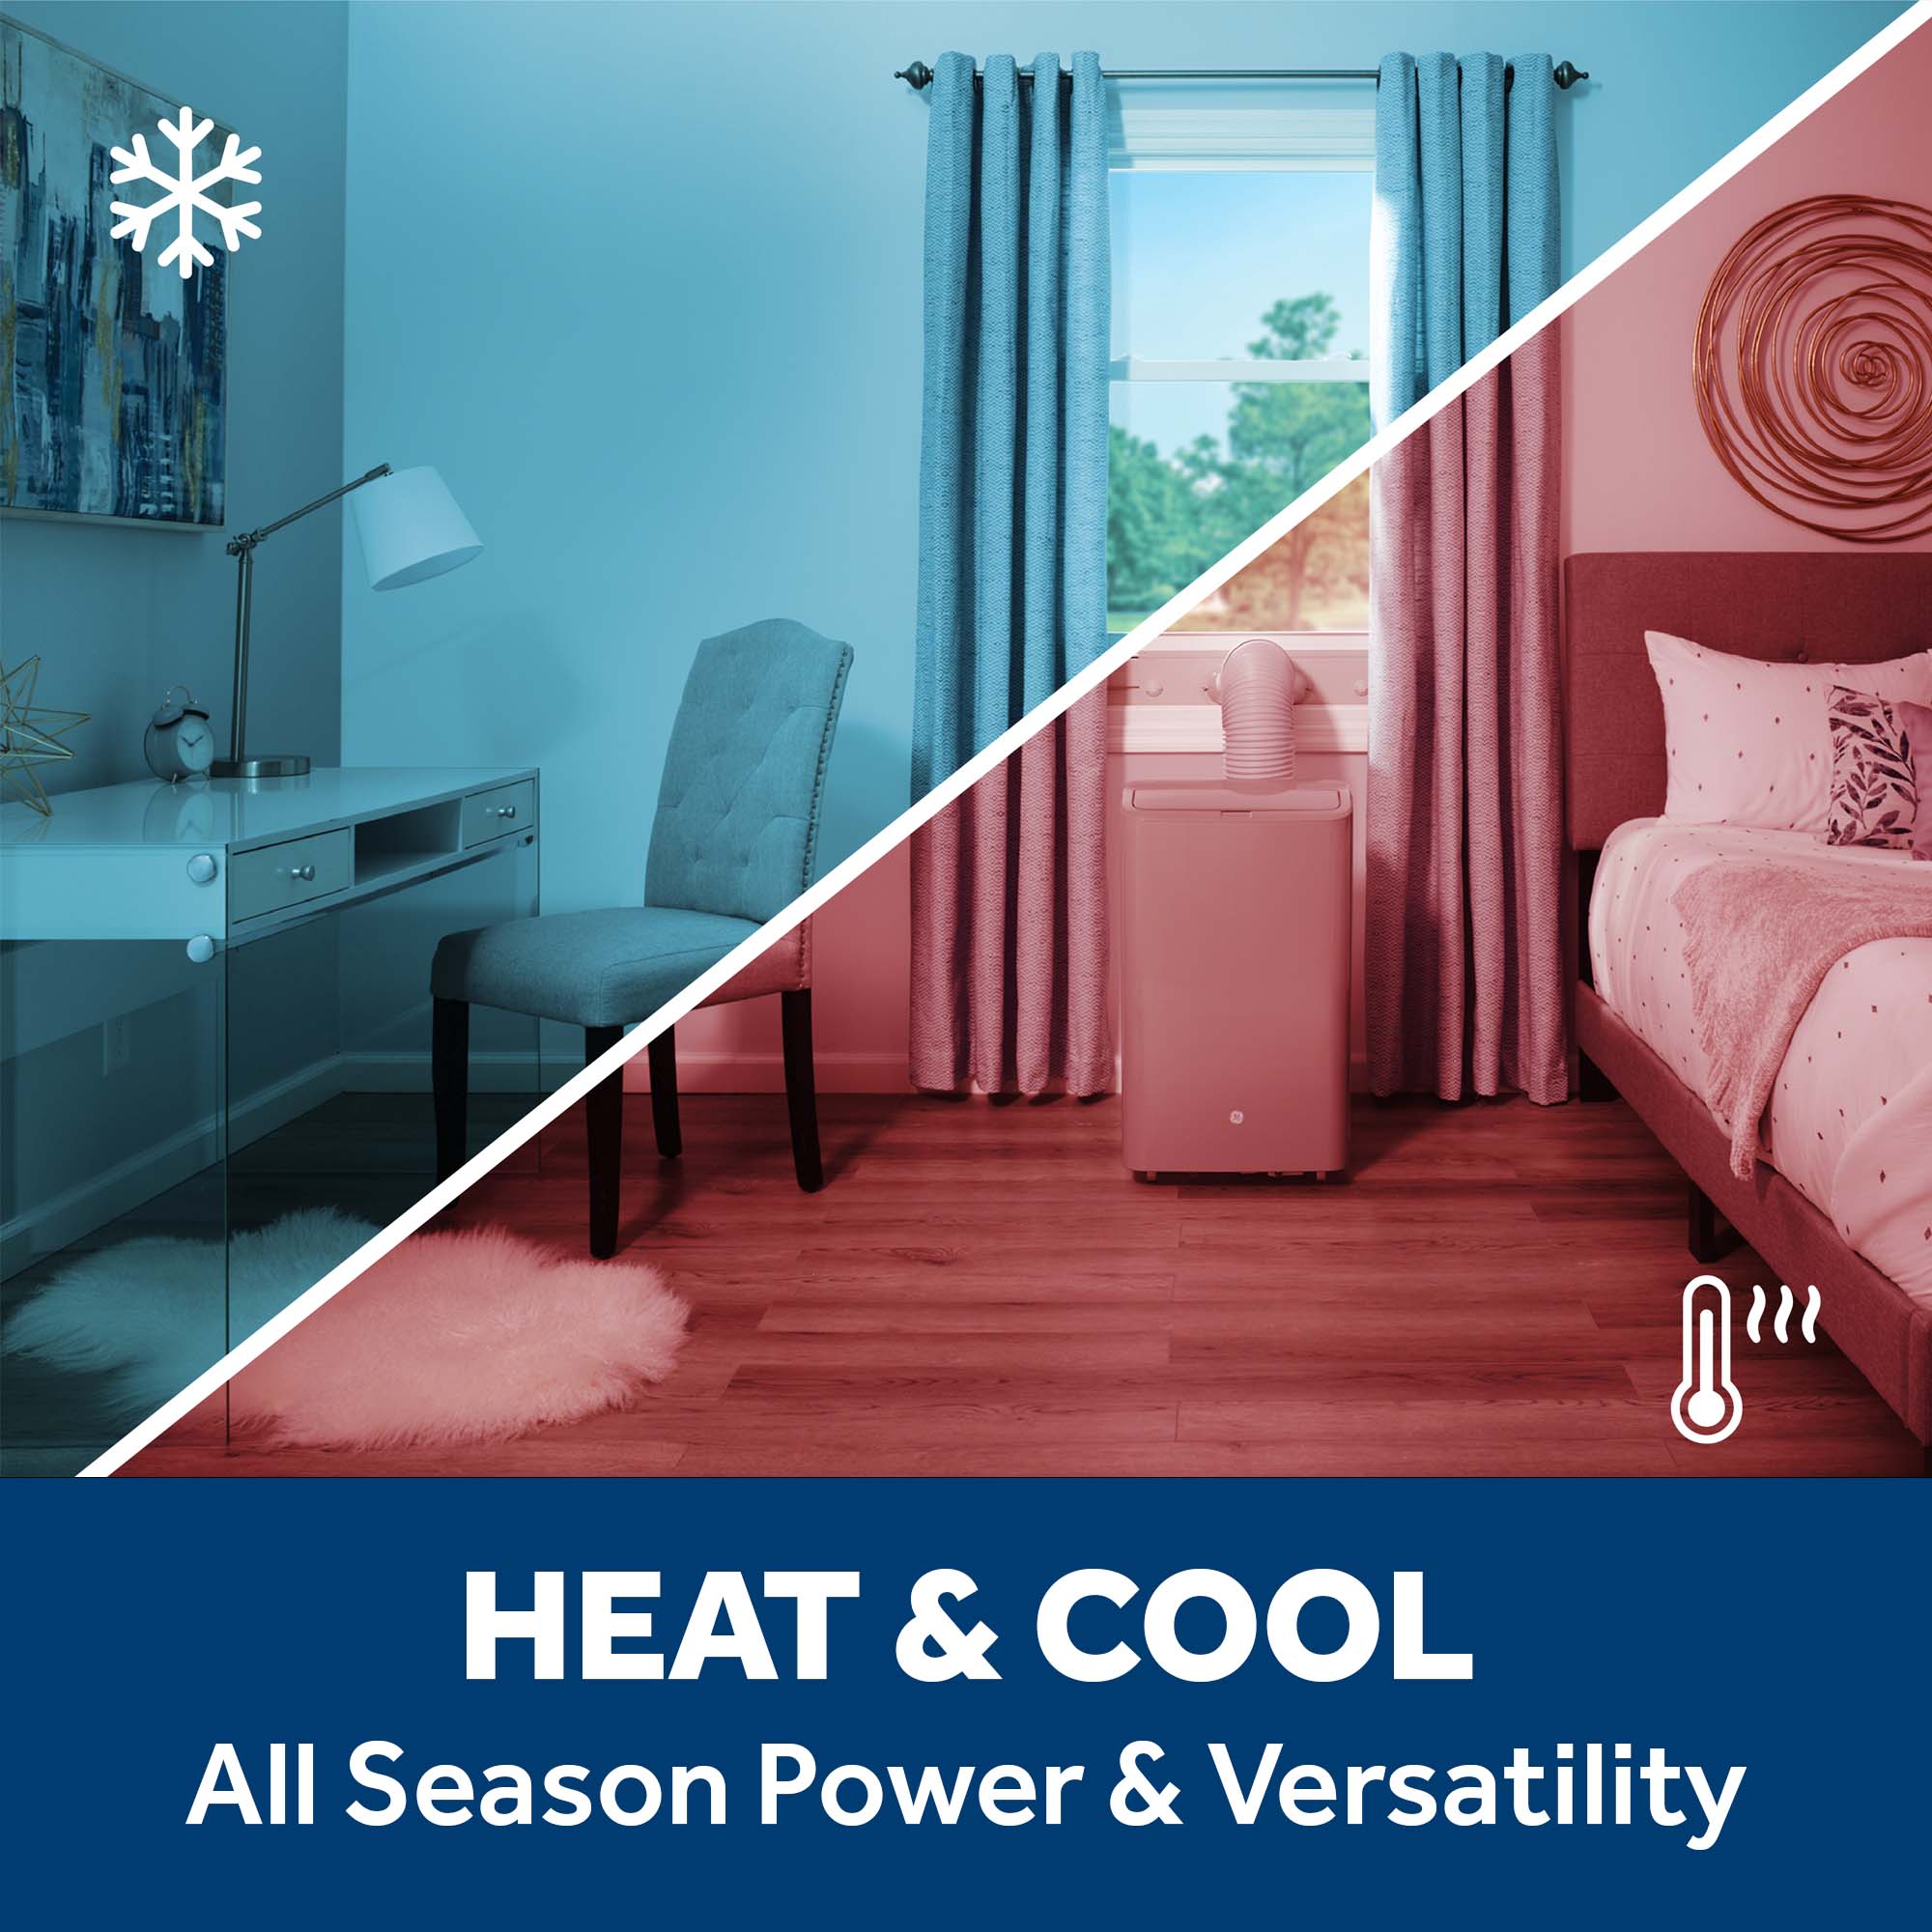 GE® 10,000 BTU Class Smart Heat/Cool Portable Air Conditioner for Medium Rooms up to 450 sq ft. (10,300 BTU DOE)